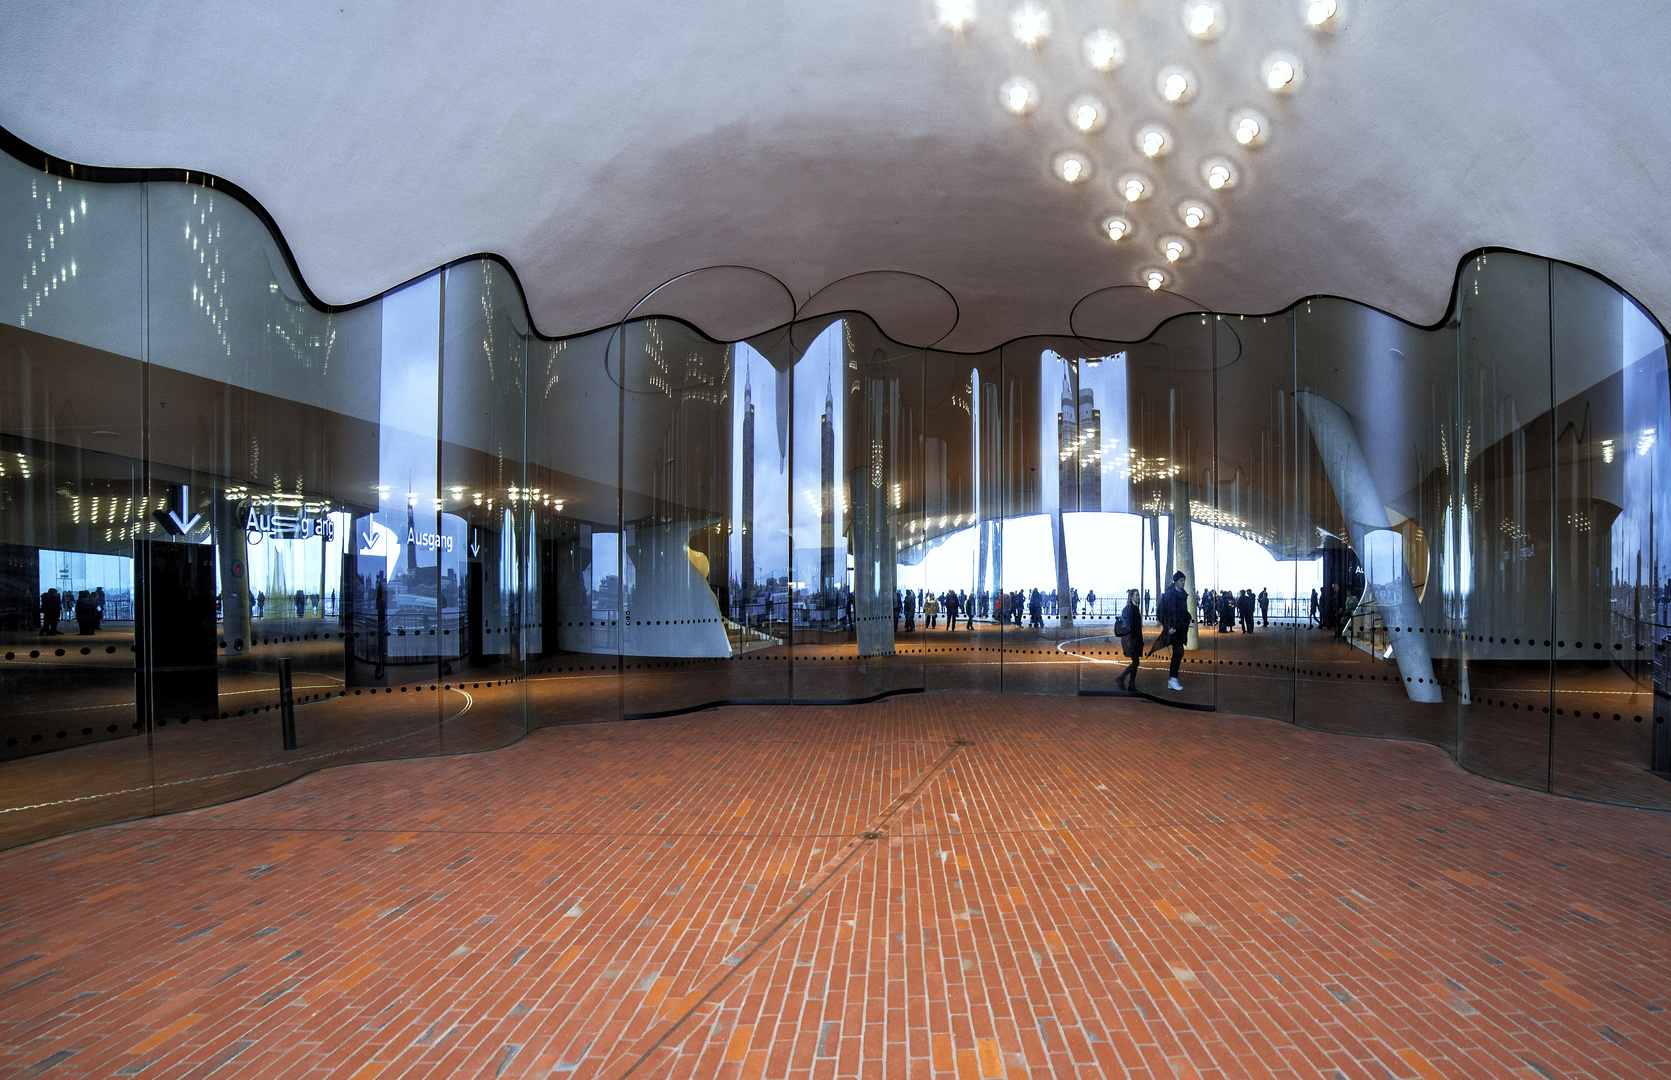 Plaza Elbphilharmonie Hamburg